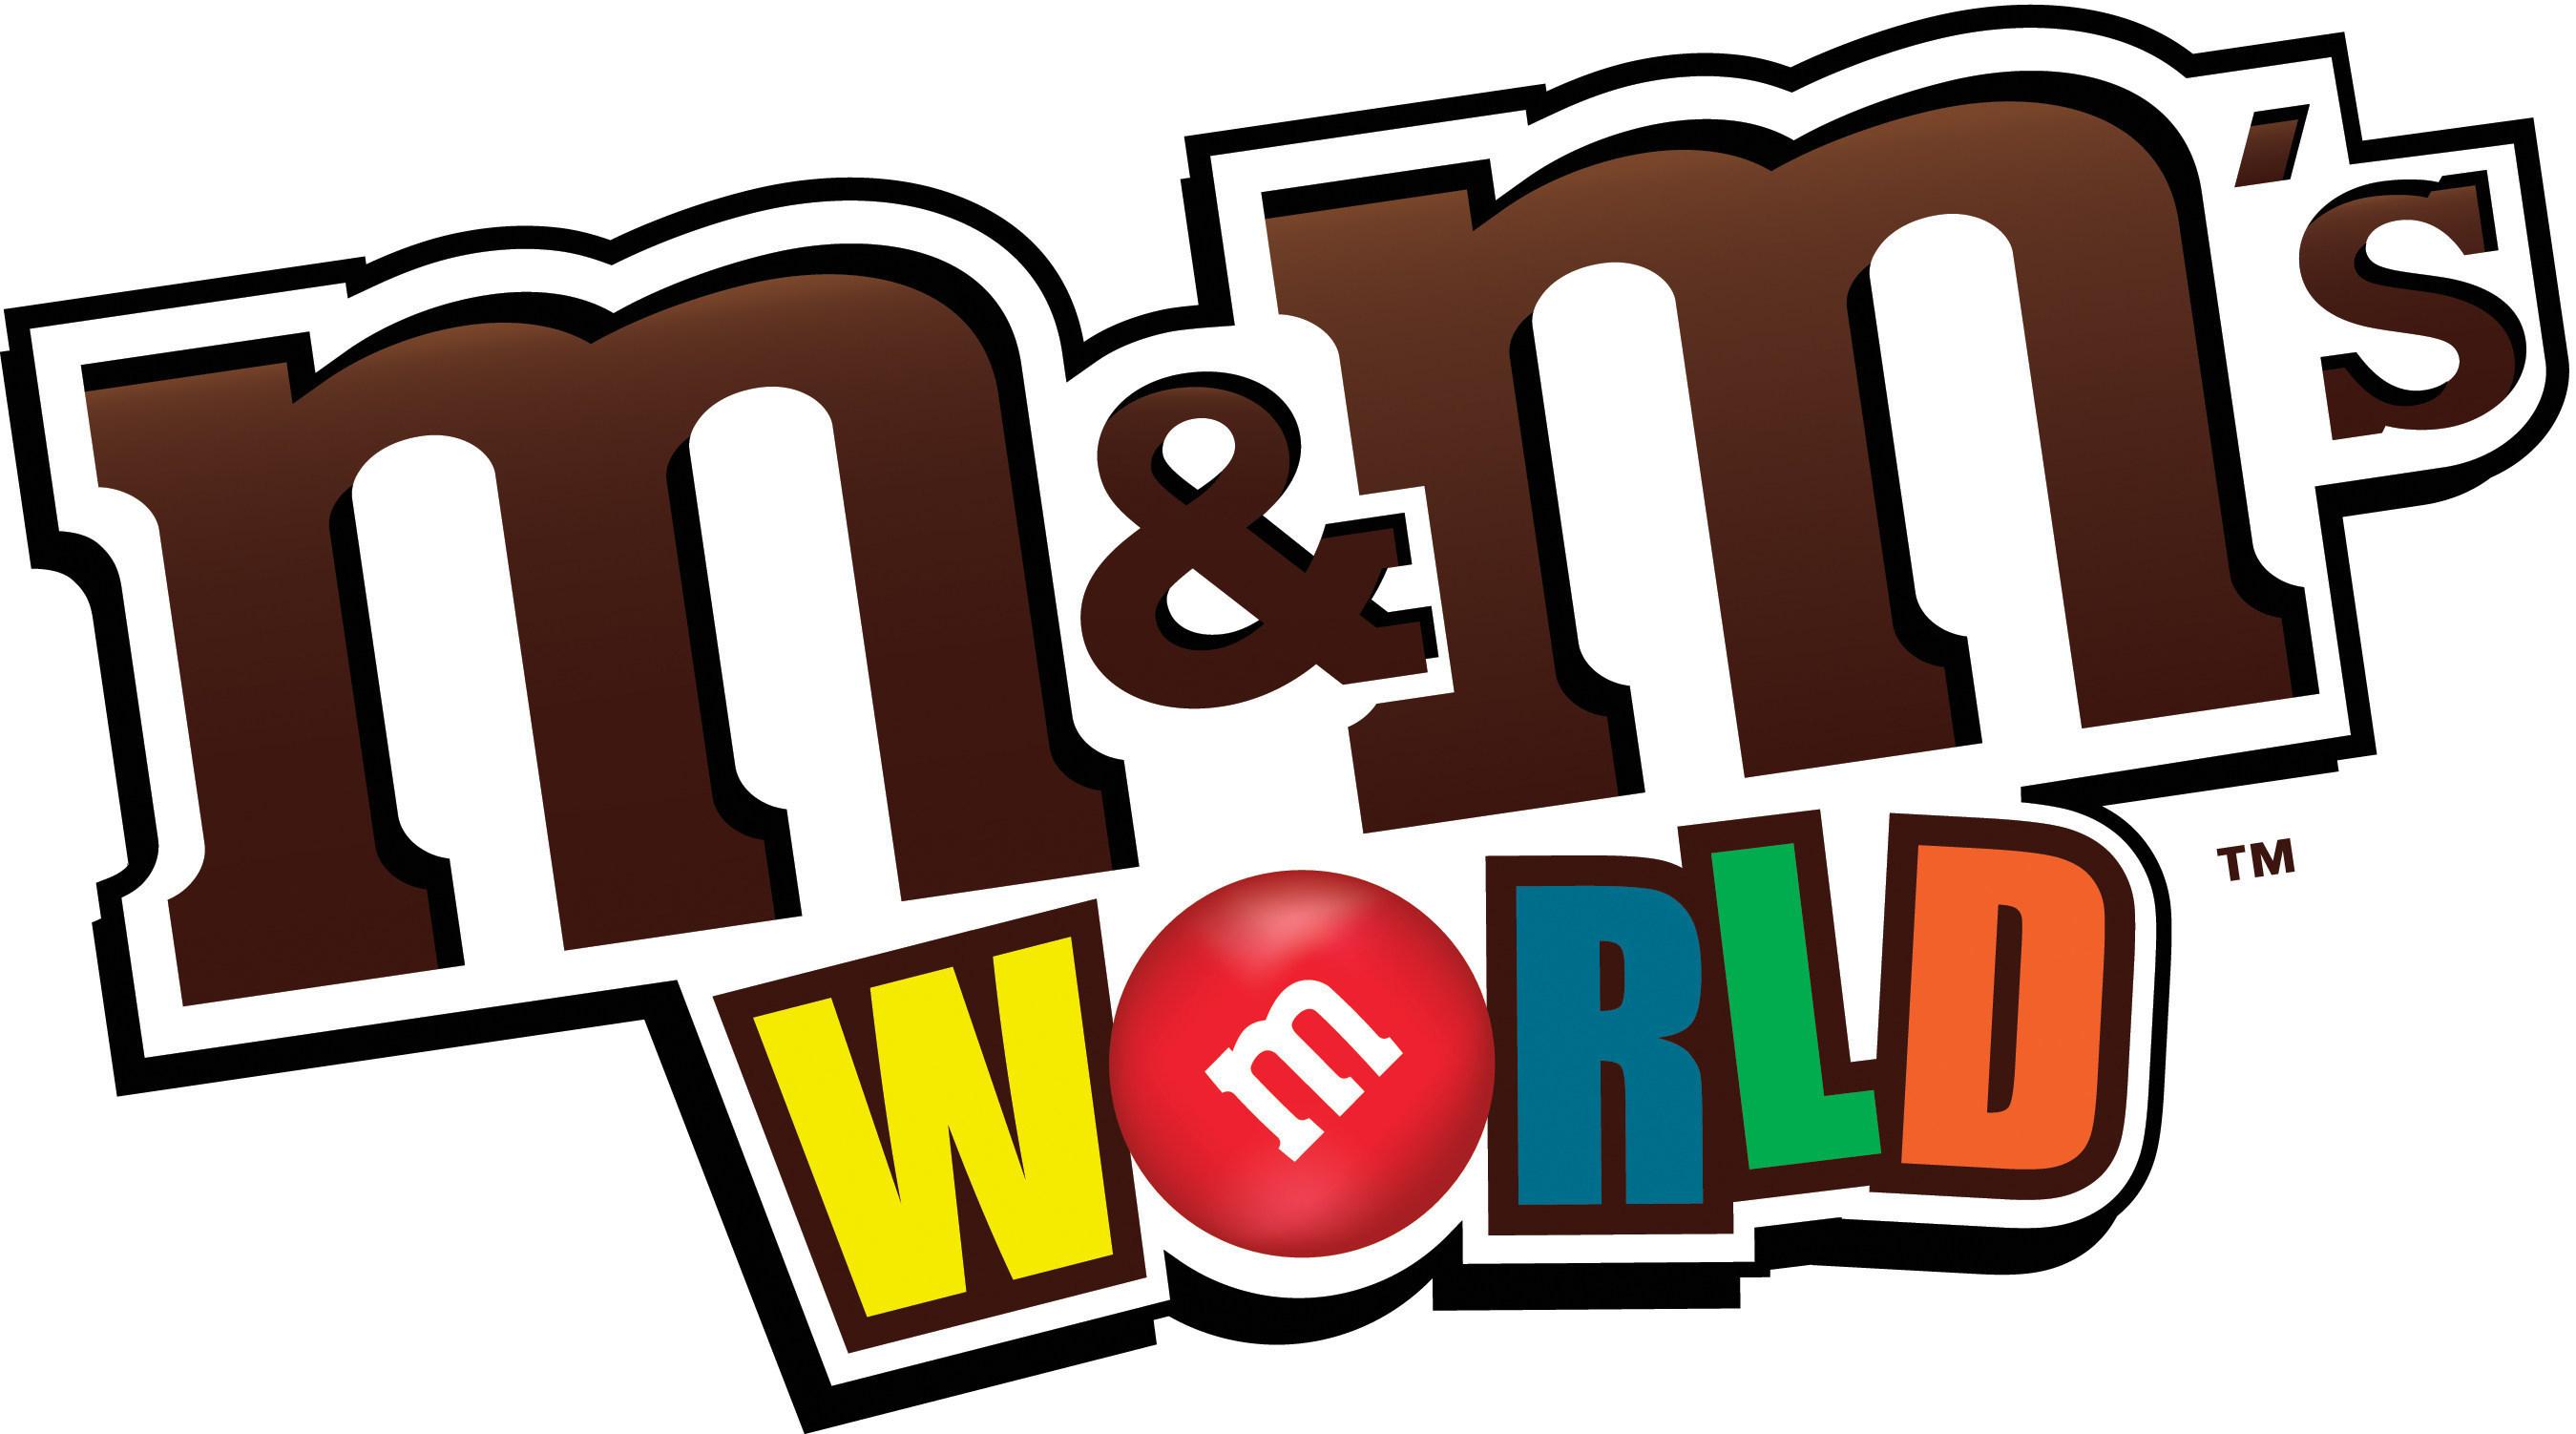 M&M Candy Logo - M&M's World of London Business Alliance